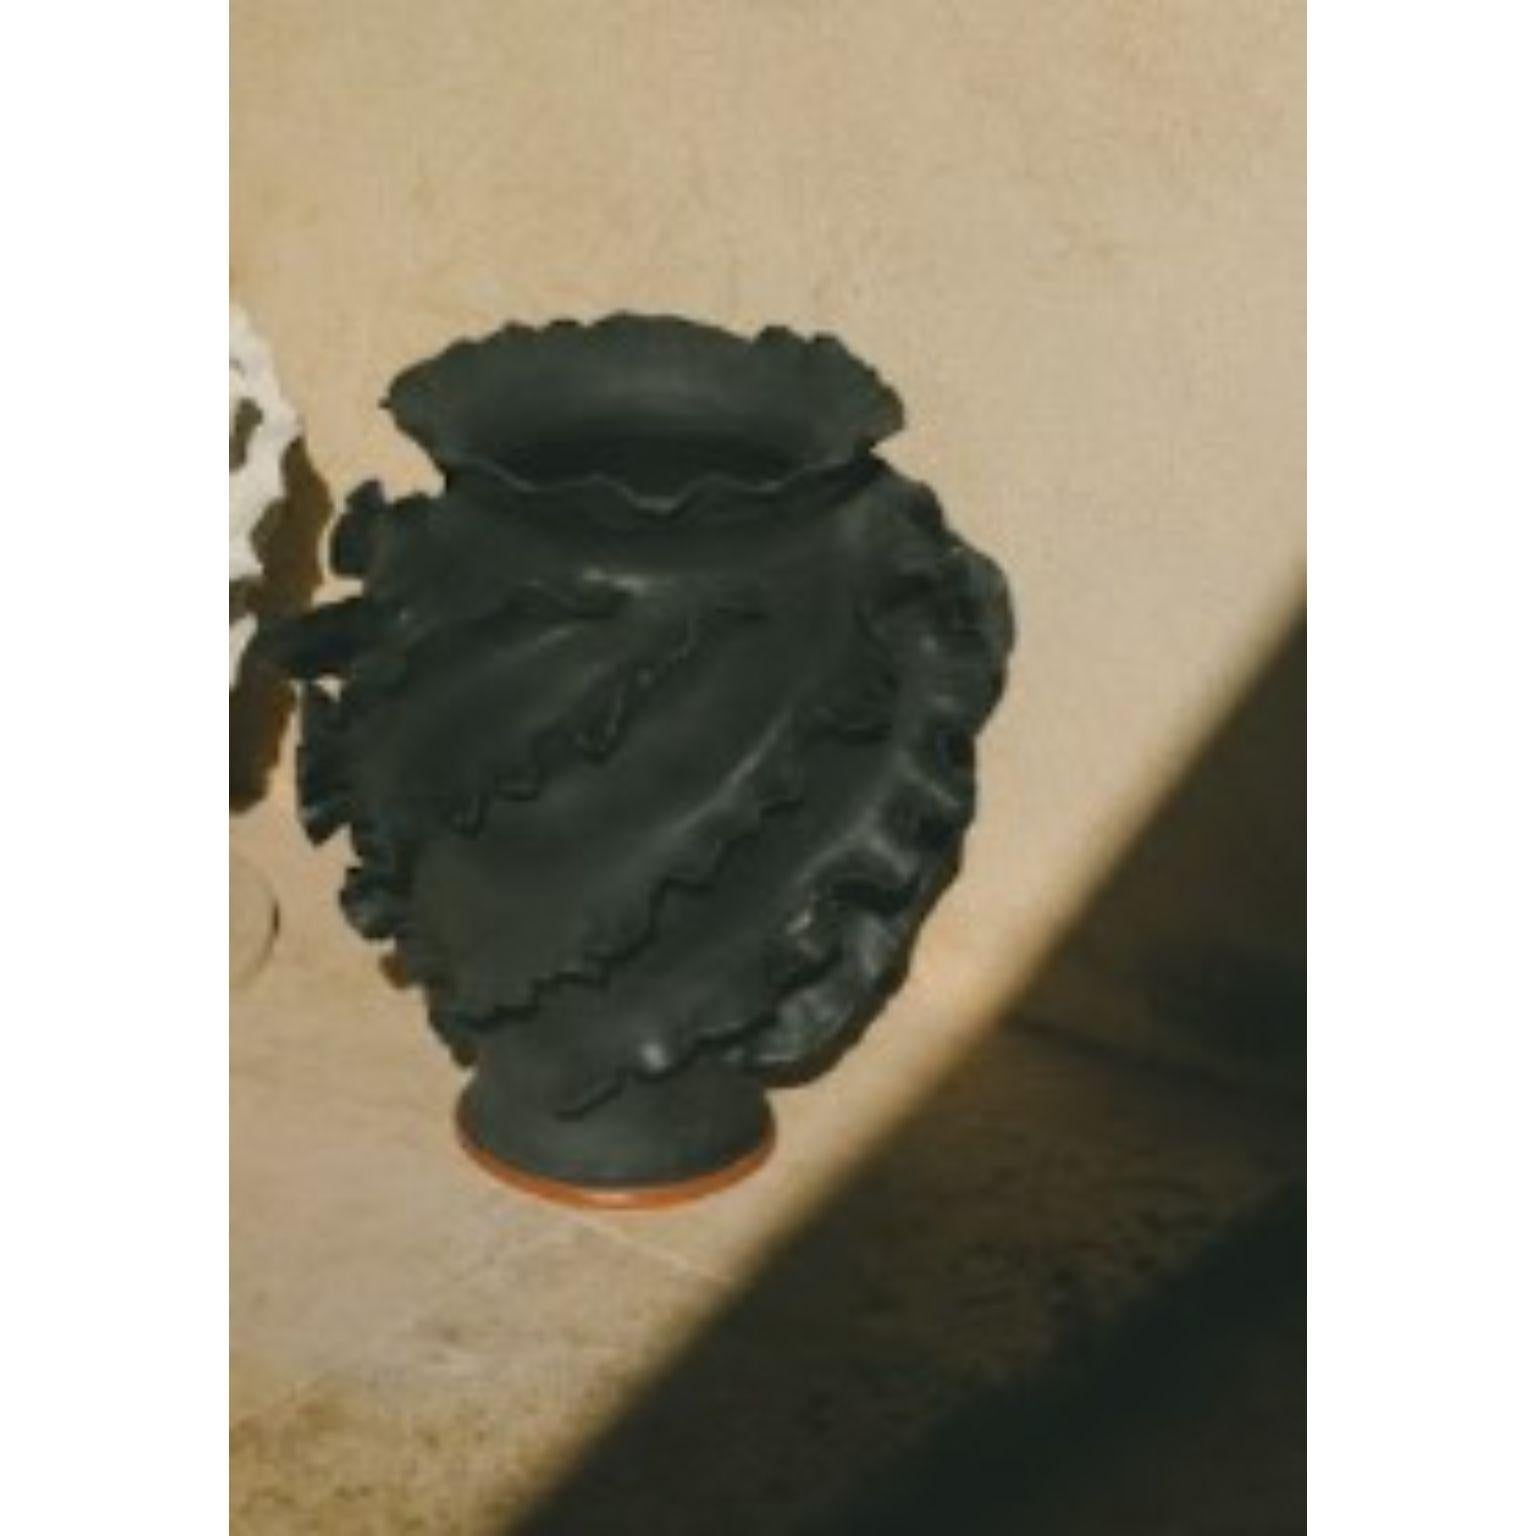 Medusa black vase by Casa Alfarera
Dimensions: D 45.7 x H 48.3 cm
Materials: Matte black glaze

The Medusa Vase is a large flower pot or decorative piece that takes the conch motif that Casa Alfarera has been developing since the origin of the